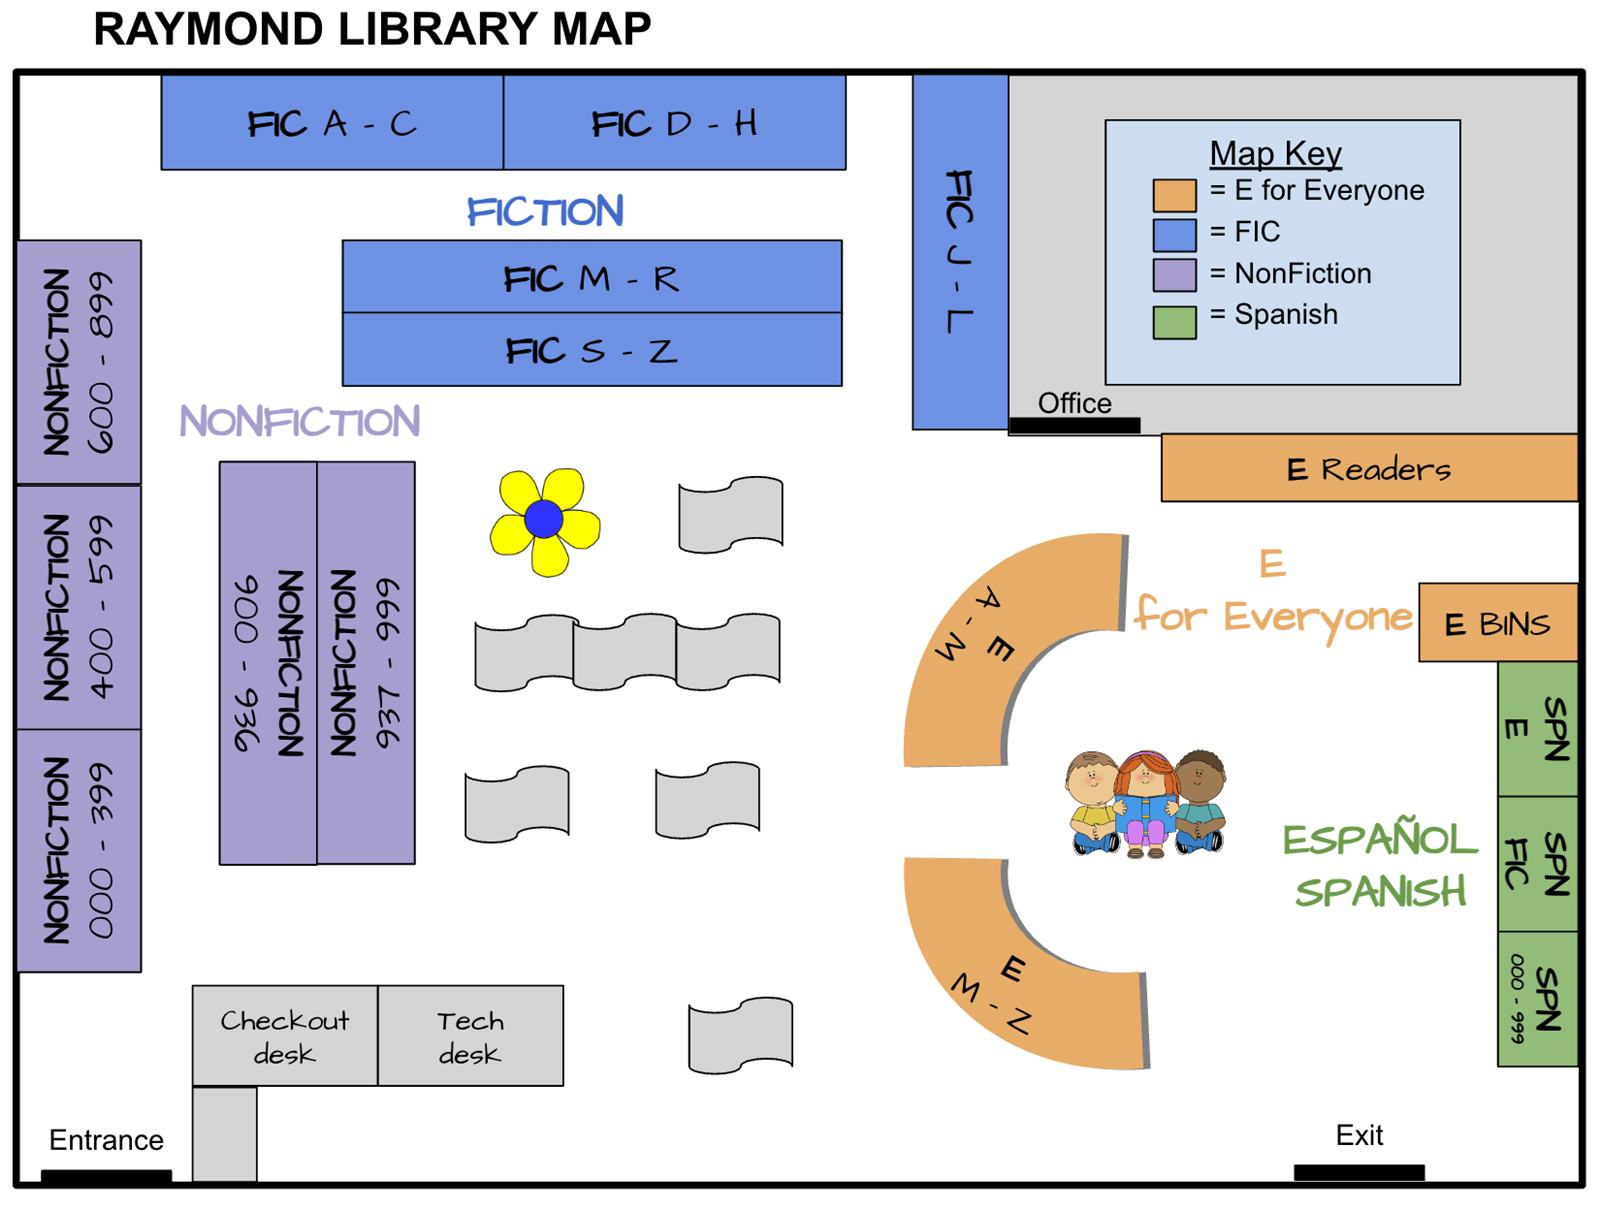 Raymond Library Map